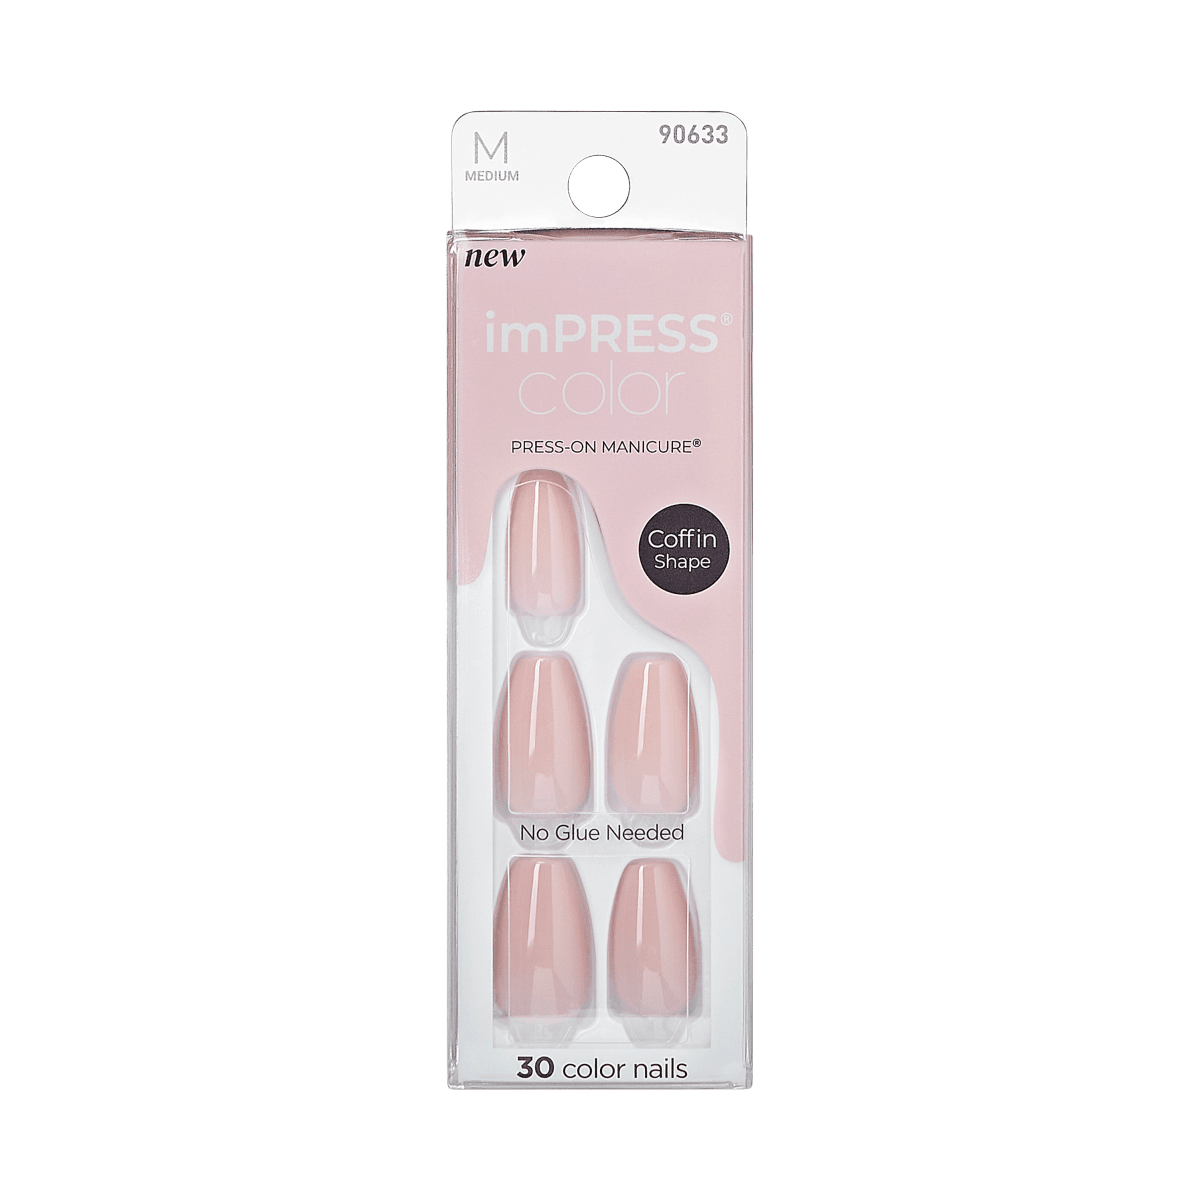 imPRESS Color Press-on Manicure - Fairy Dust